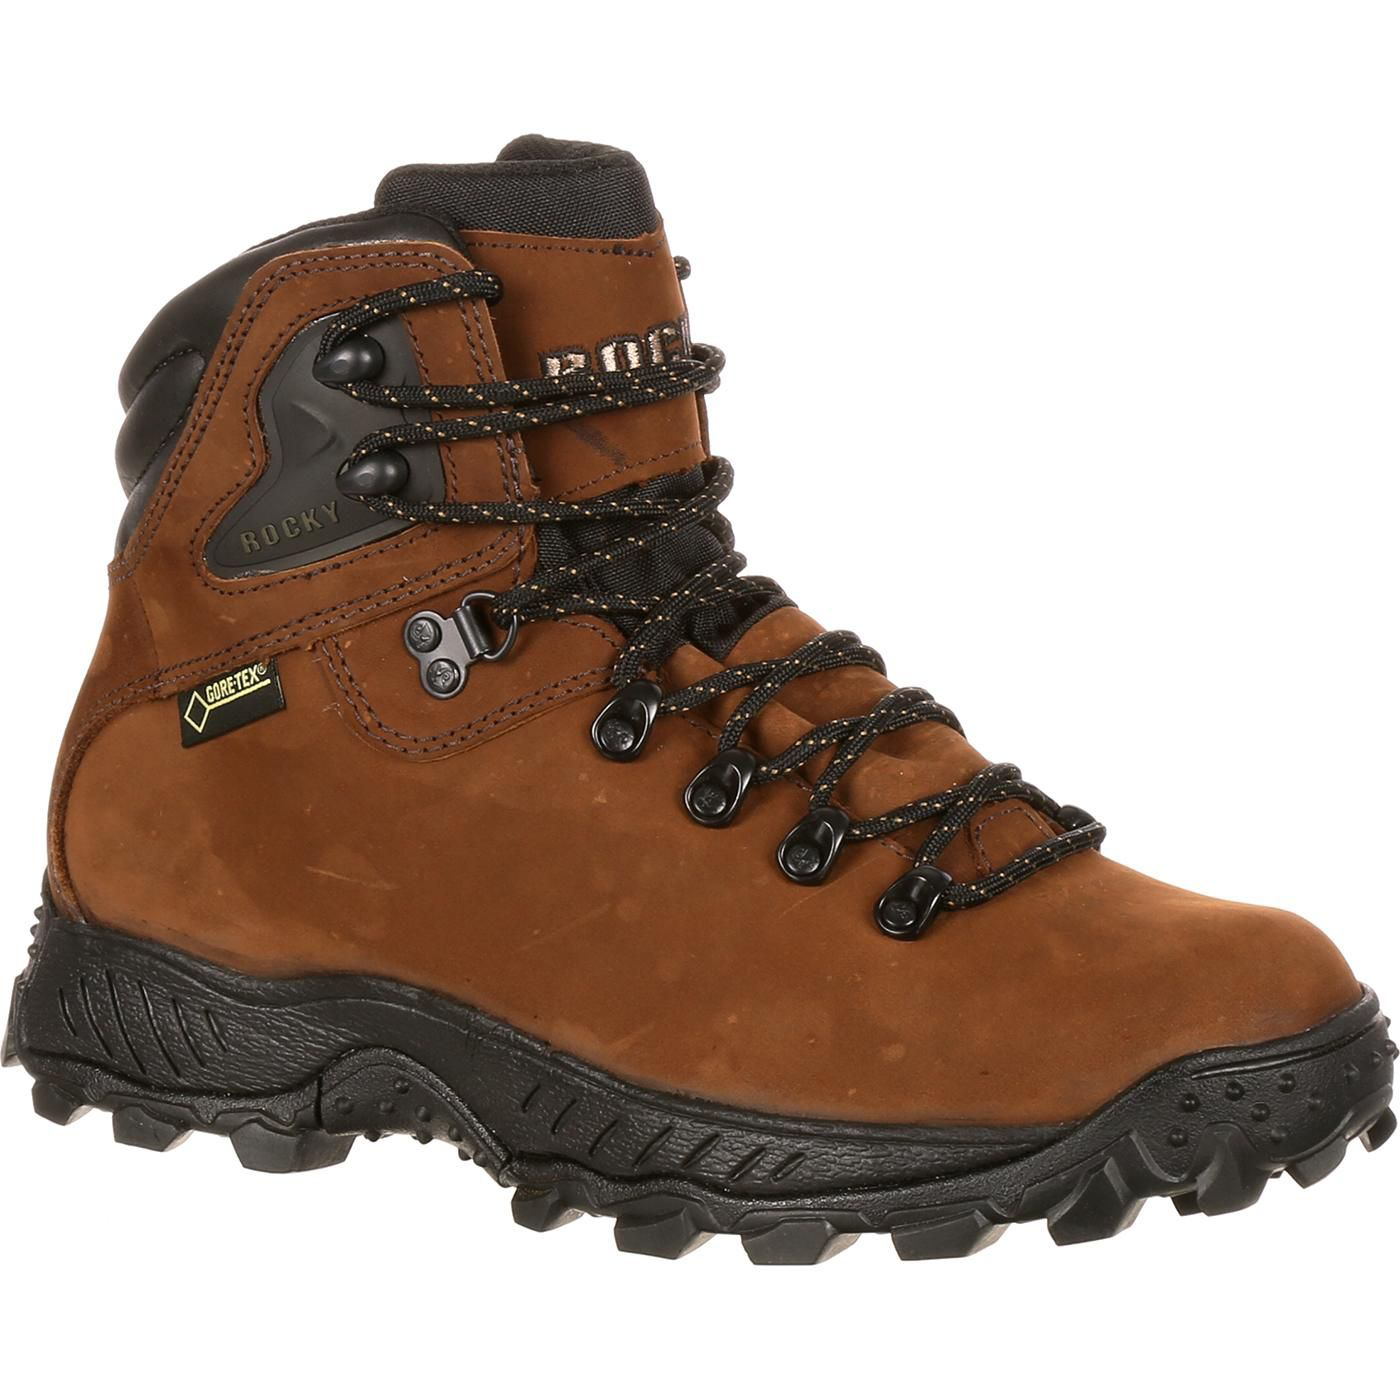 Rocky Ridgetop GORE-TEX 6"" Hiking Boots for Men - Brown - 11.5M